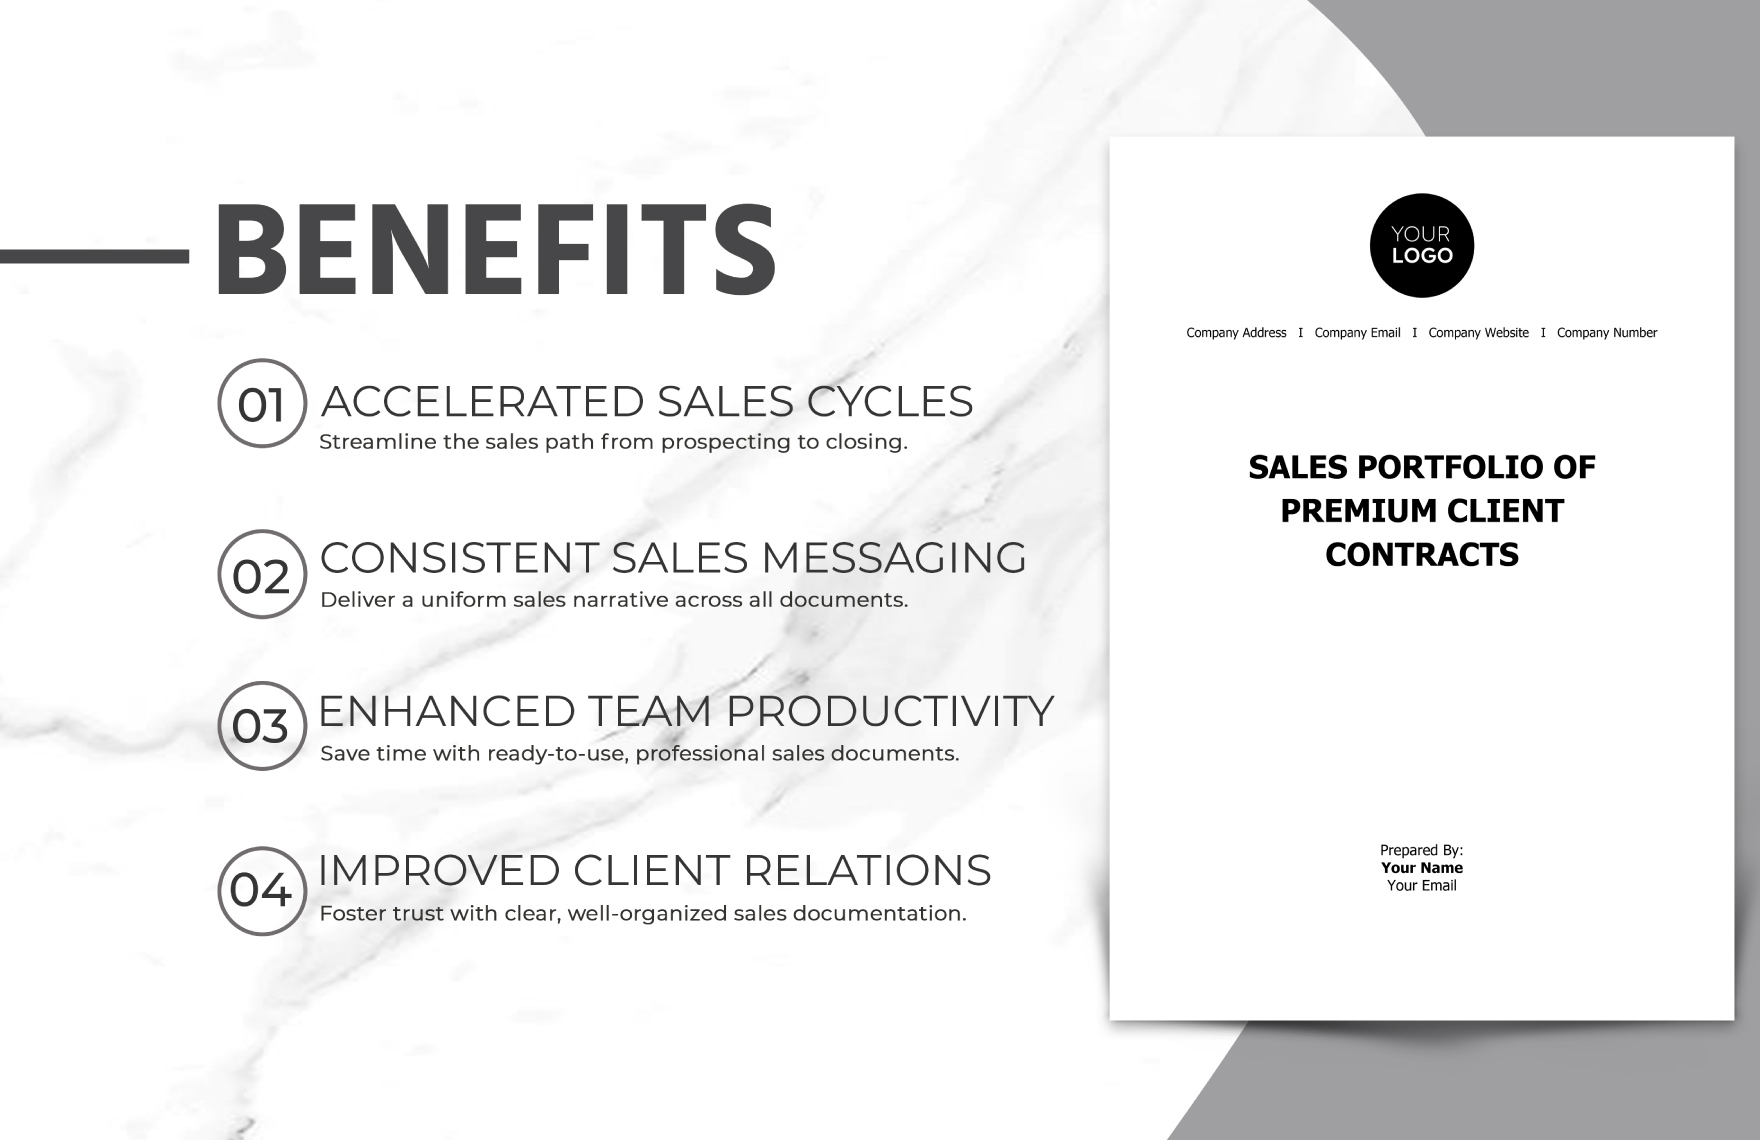 Sales Portfolio of Premium Client Contracts Template